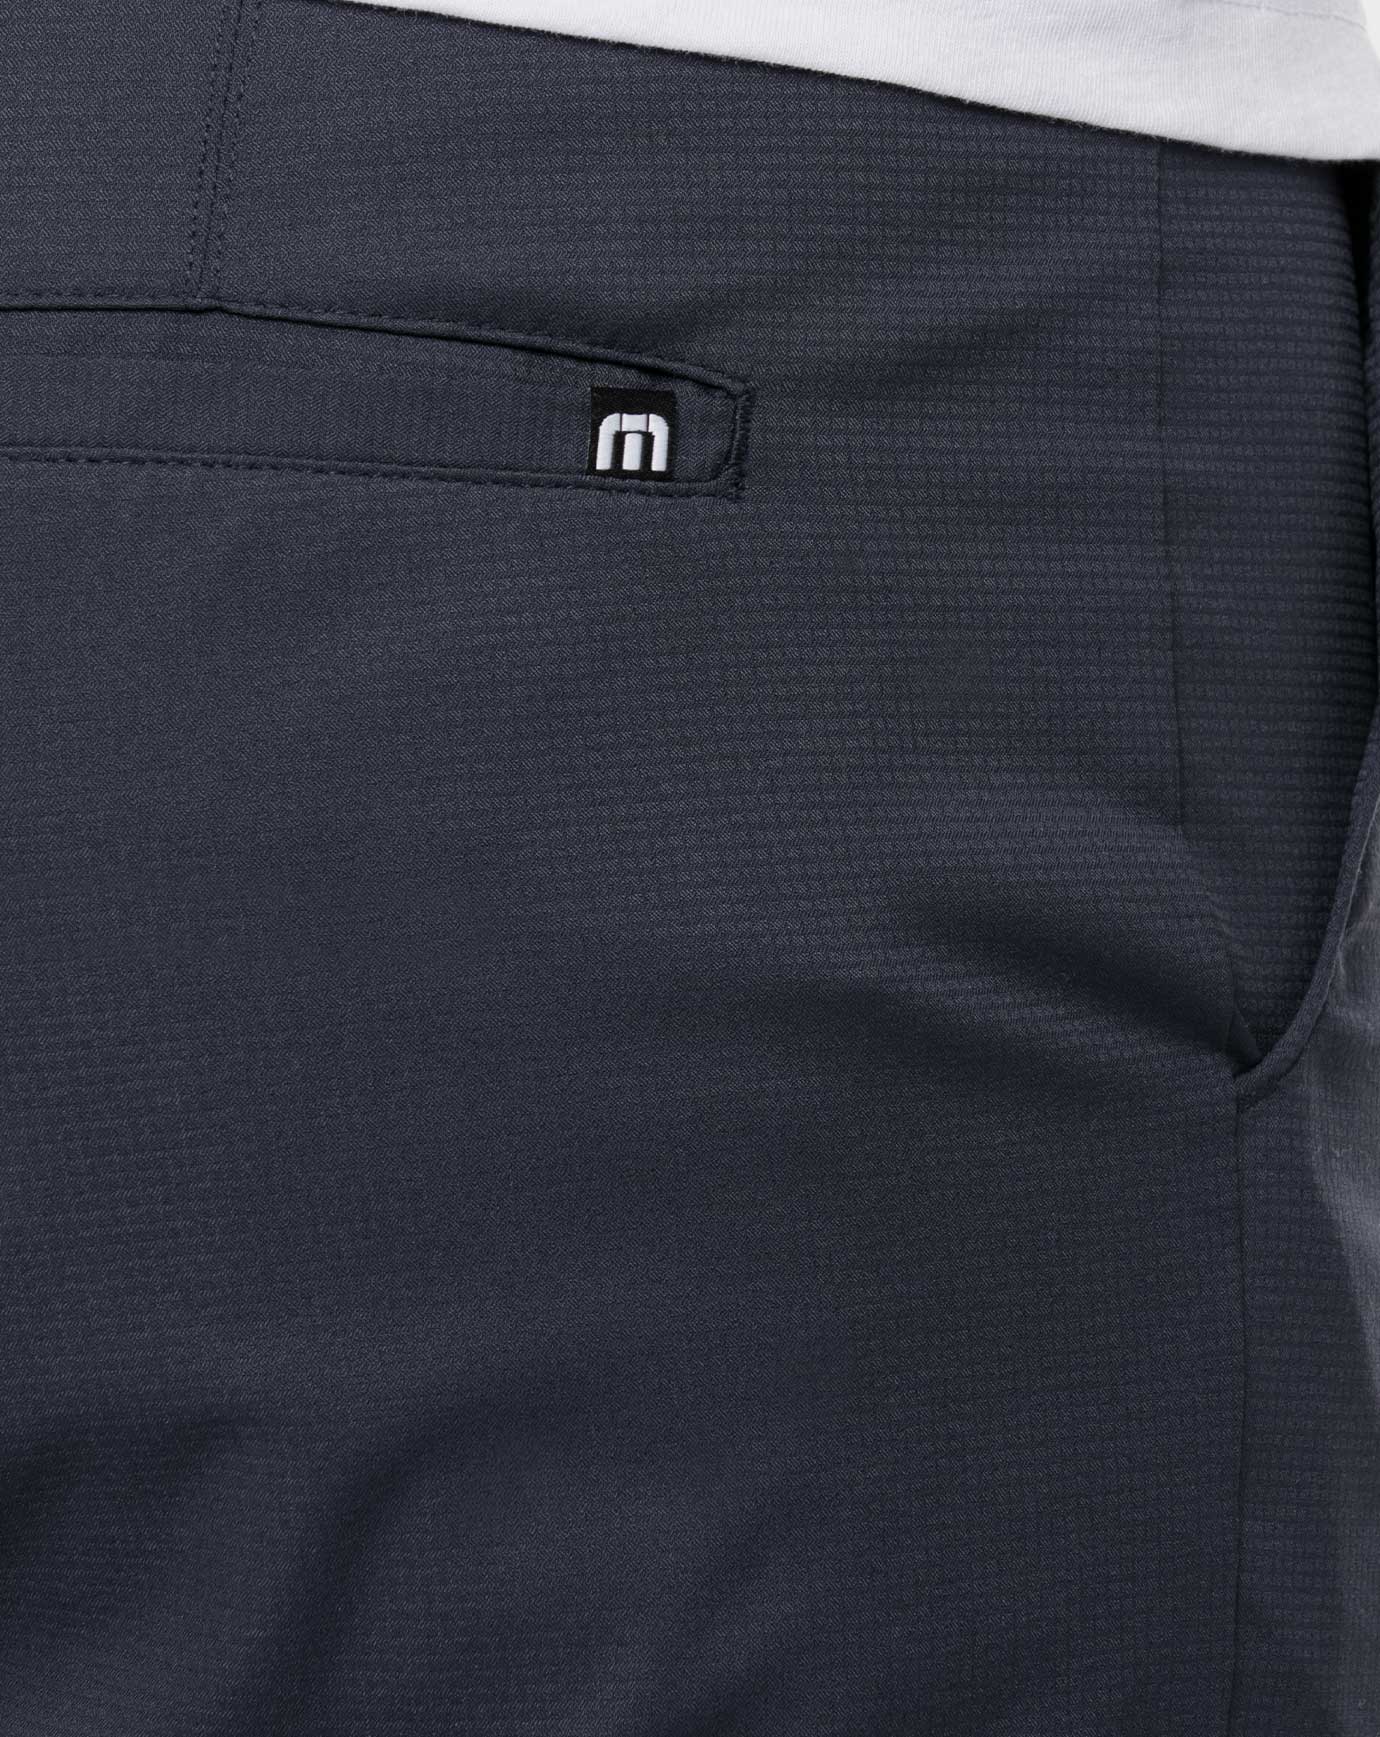 The STARNES short features a low-profile design that leverages premium fabrics to suit an active lifestyle.